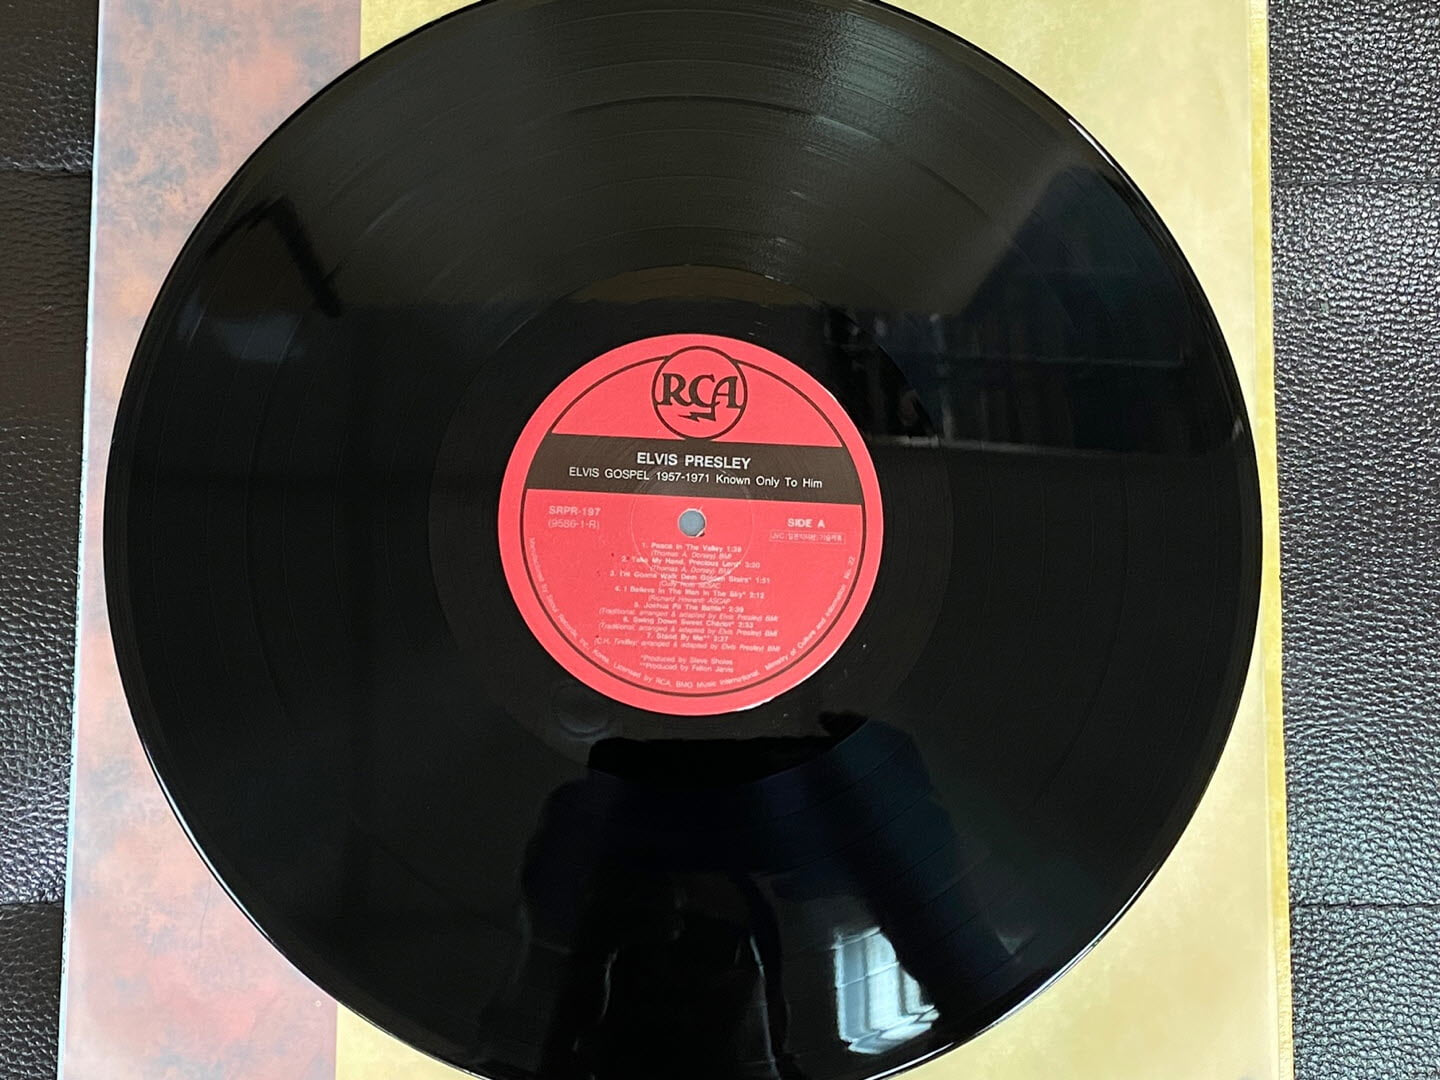 [LP] 엘비스 프레슬리 - Elvis Presley -  Elvis Gospel 1957-1971 Known Only To Him LP [서울-라이센스반]